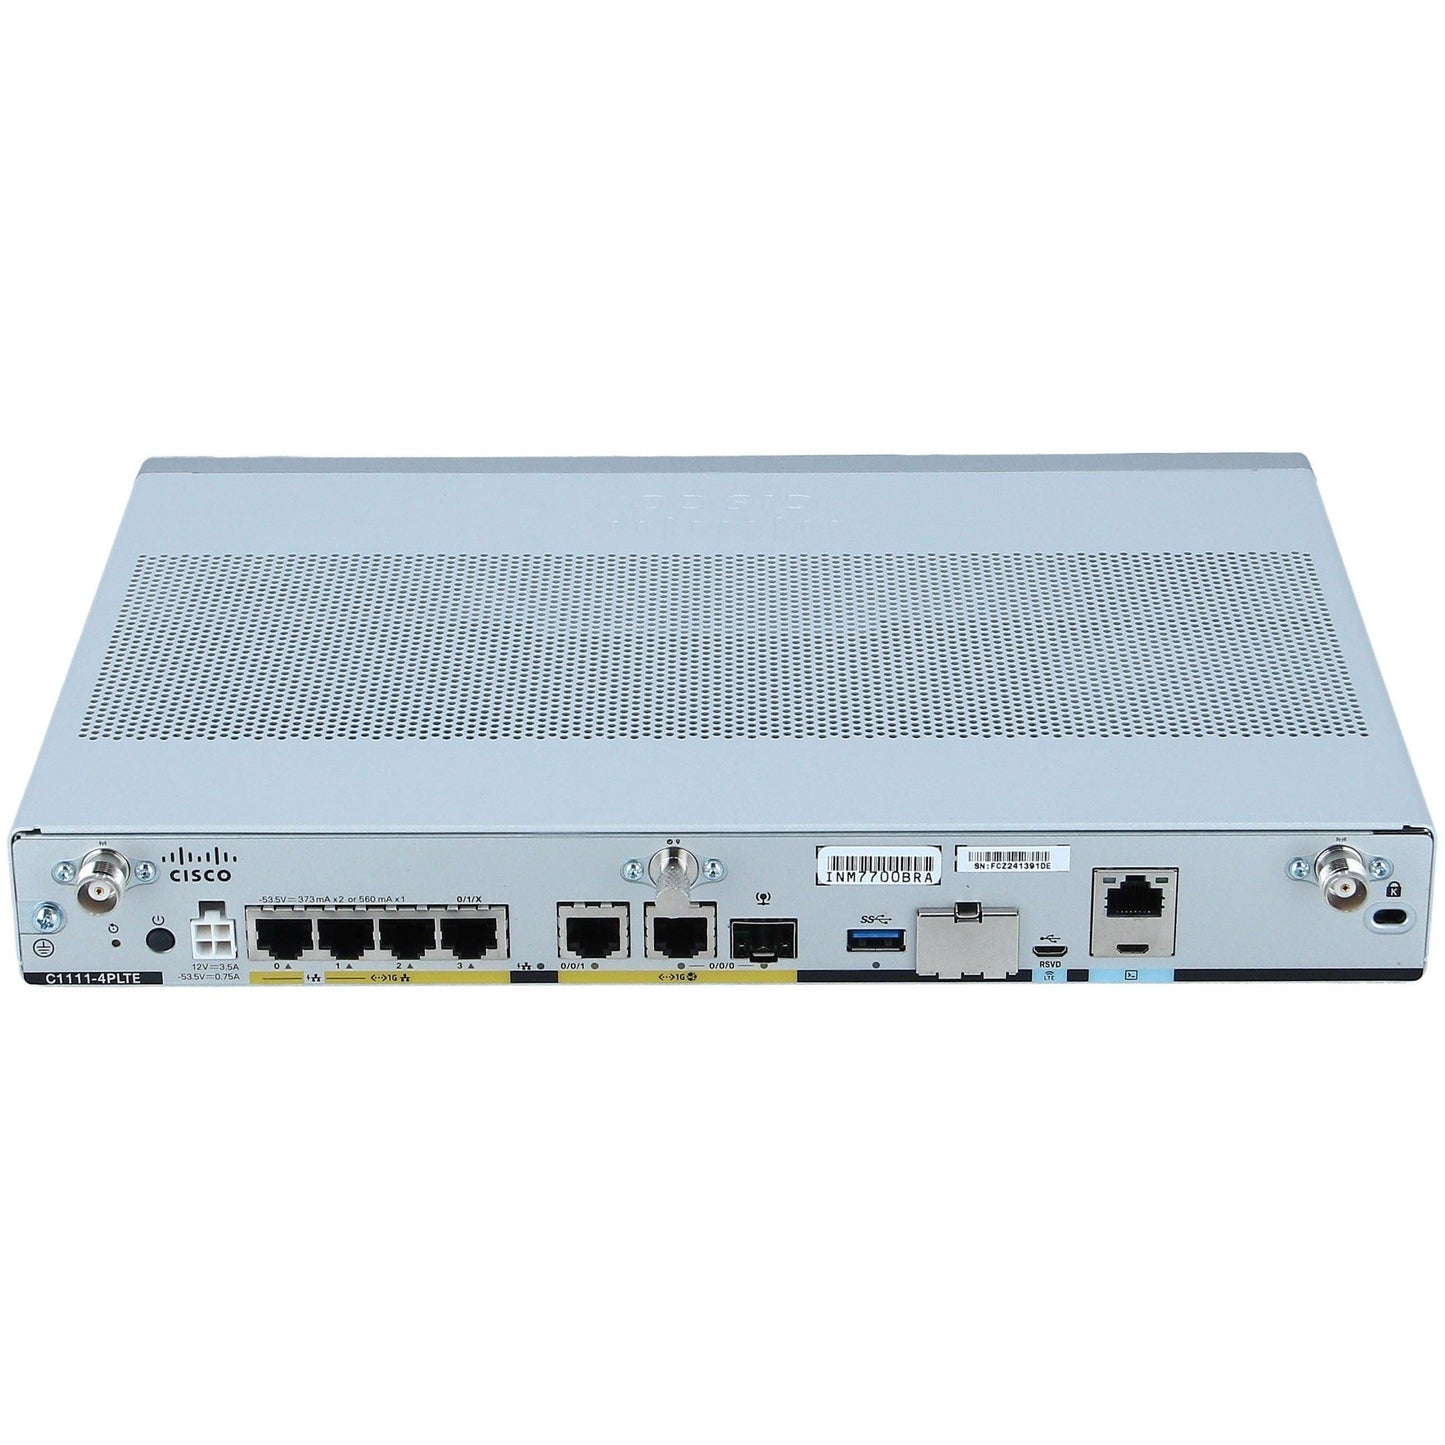 Cisco 1000 Series 4 Port Gigabit Integrated Services Router - C1111-4P Refurbished - C1111-4P-R - Reef Telecom